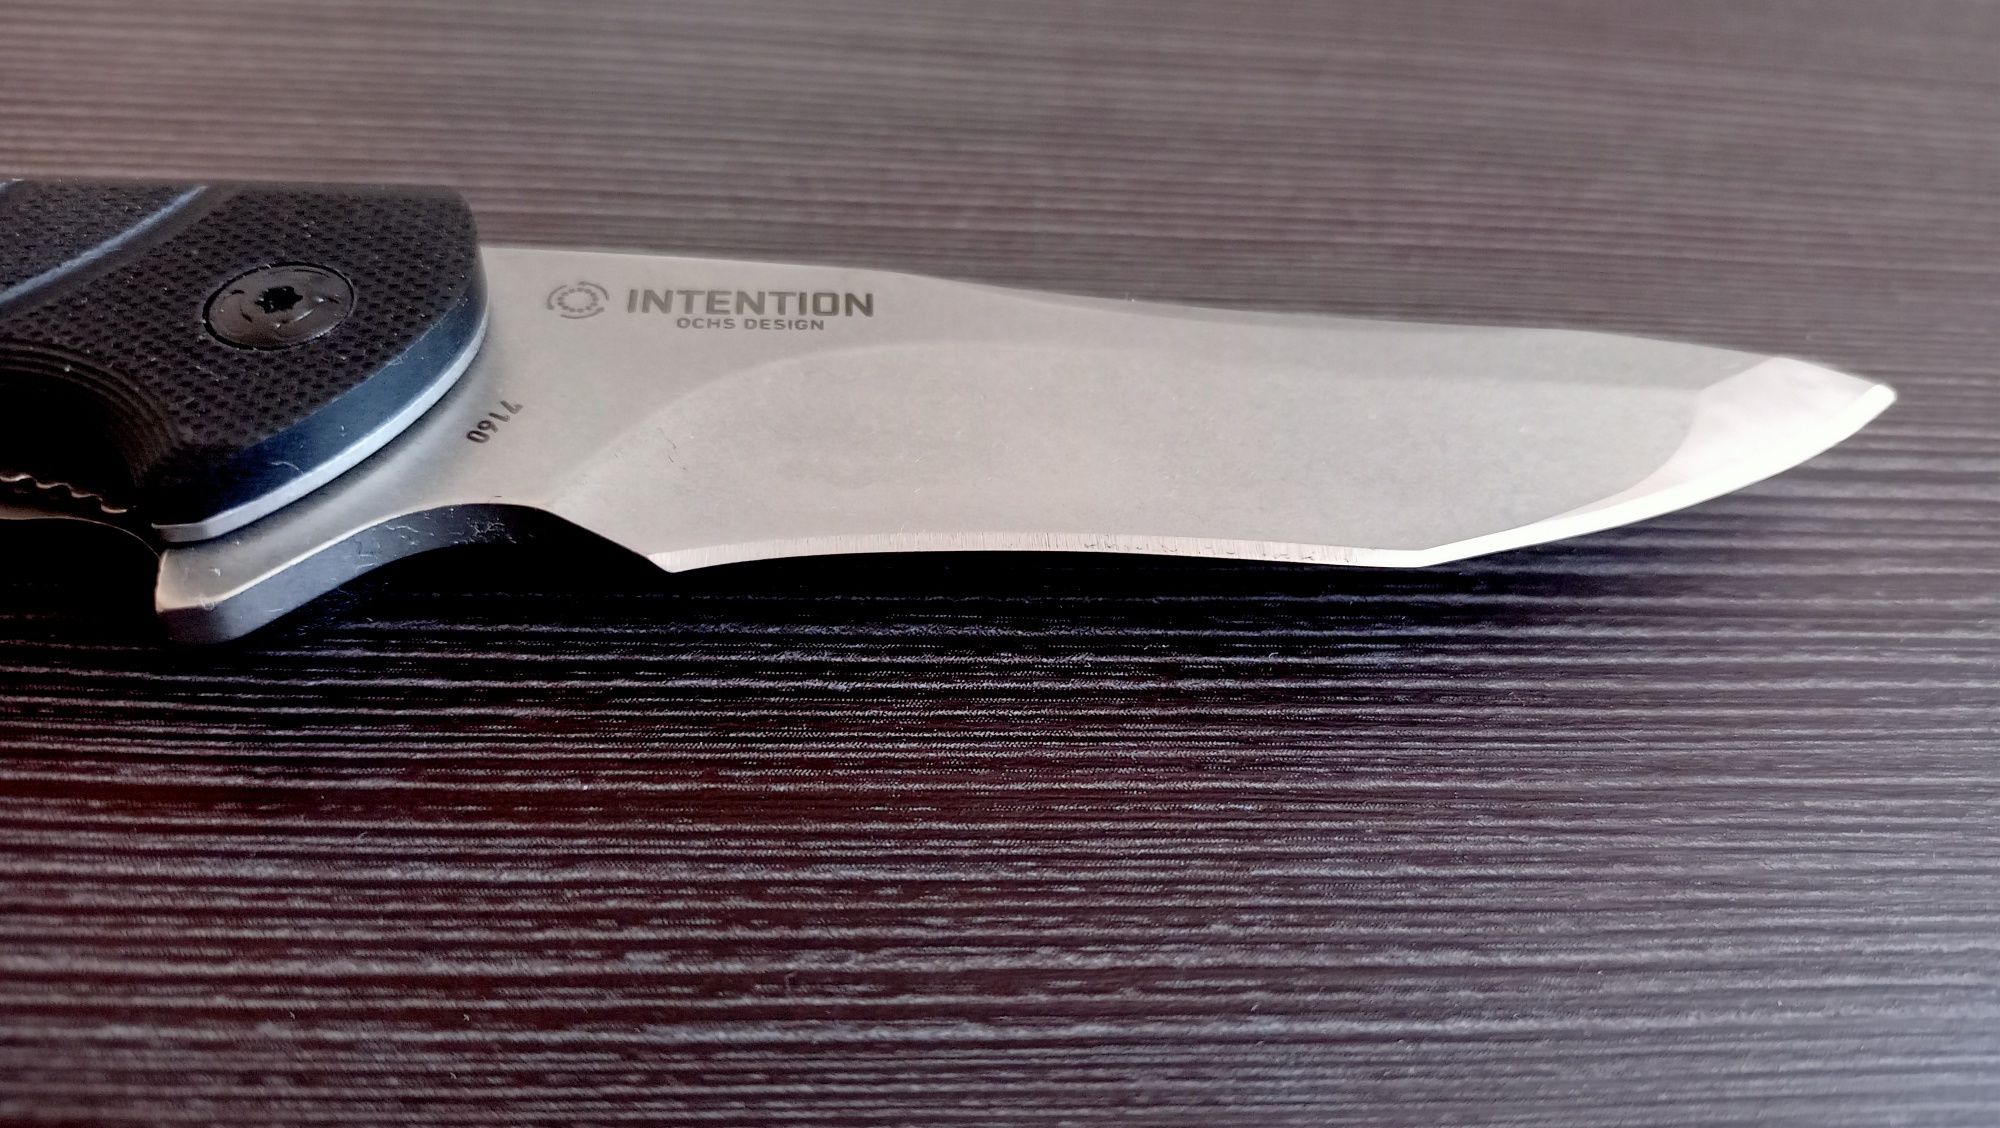 Noż składany folder CRKT Intention nowy